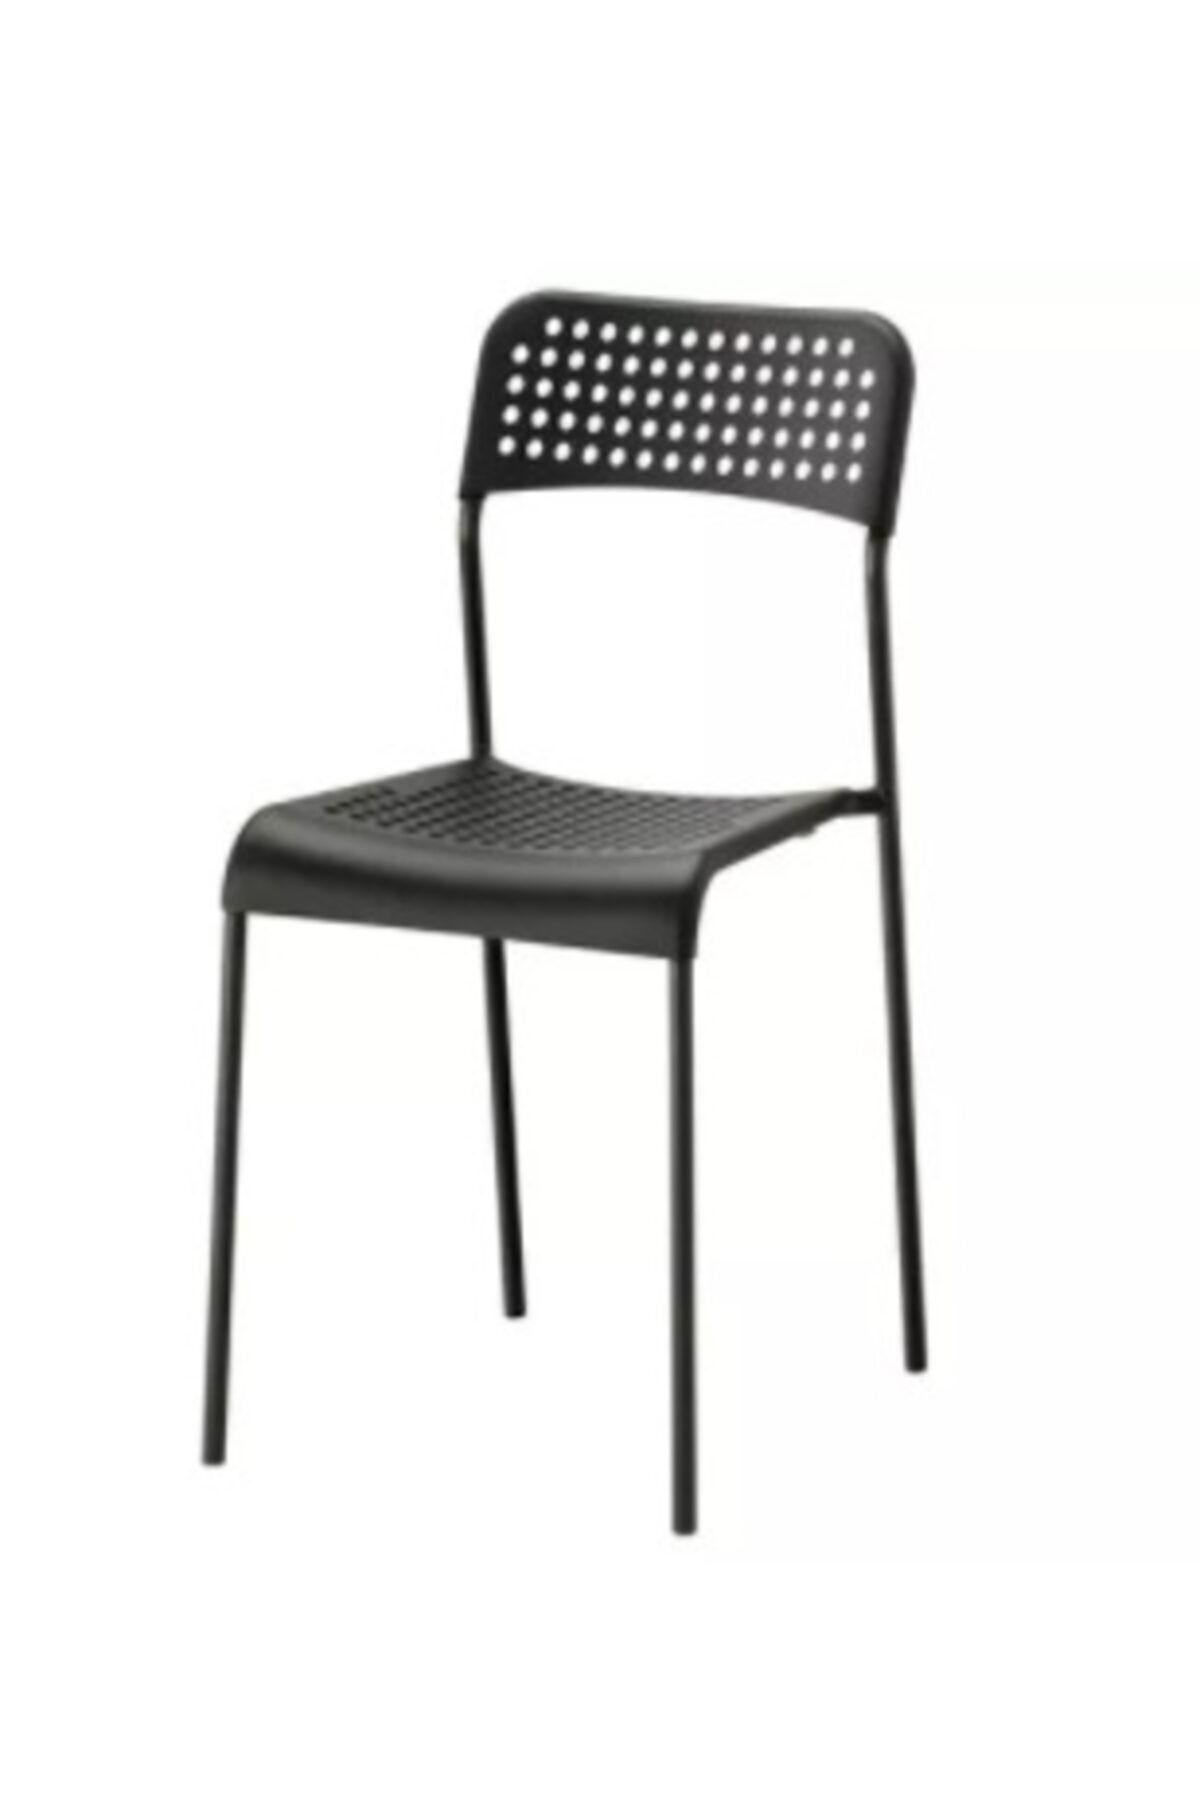 IKEA Adde Sandalye Siyah